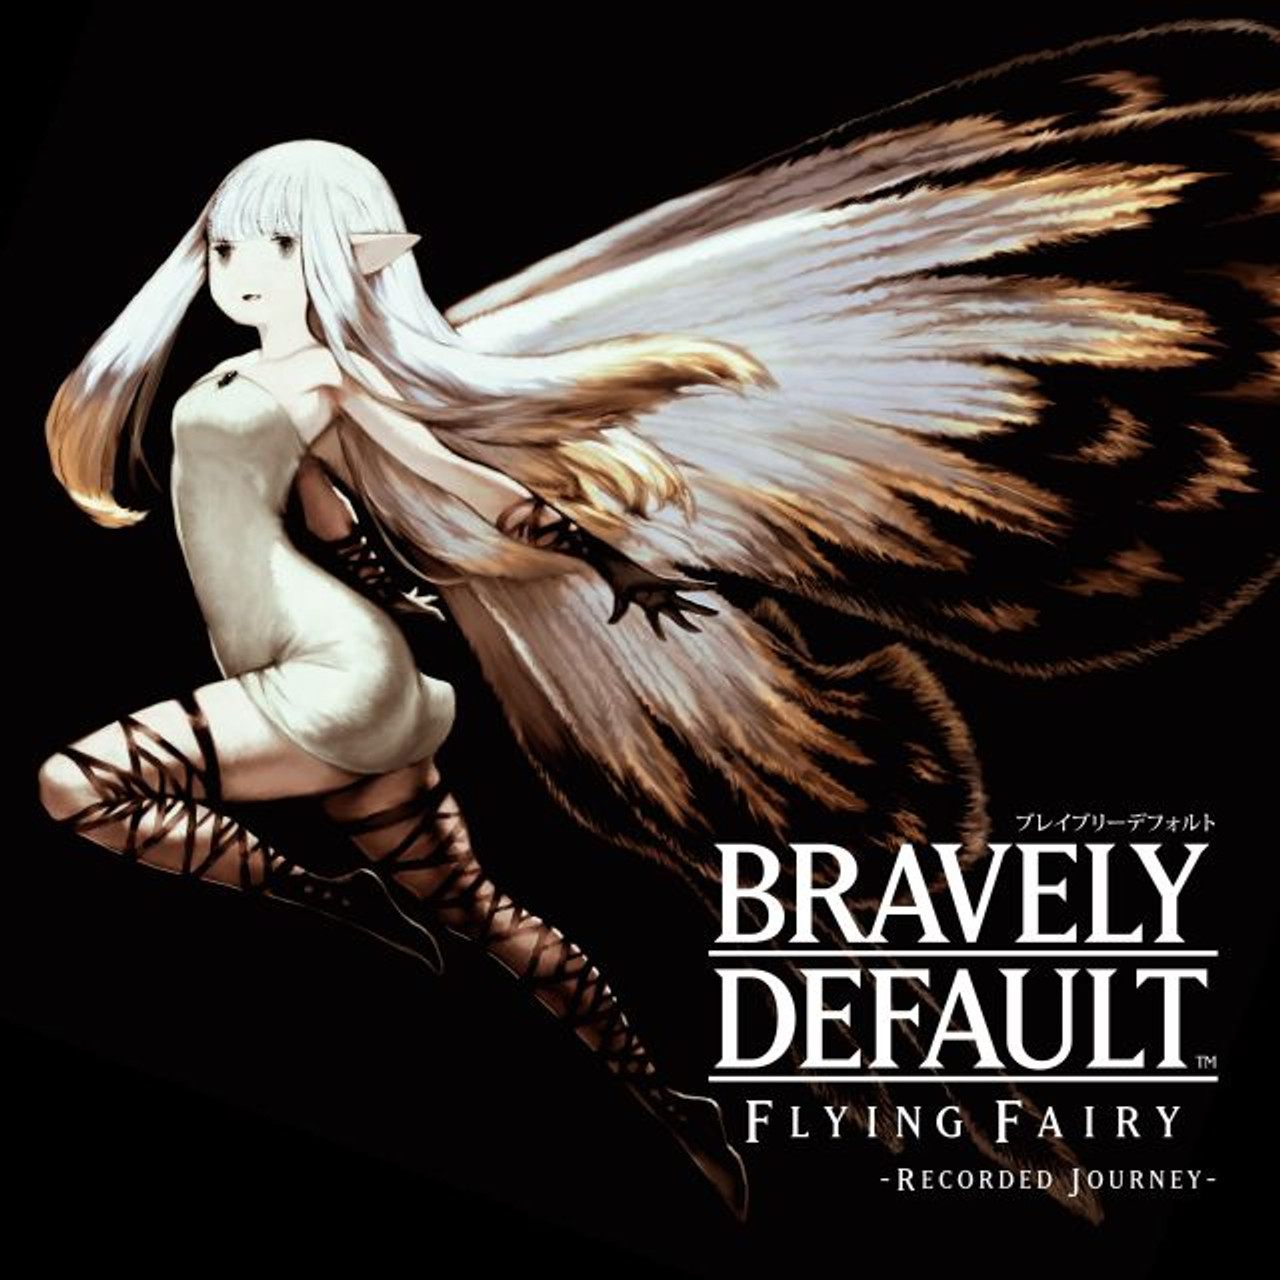 Ringabel (Bravely Default: Flying Fairy) by Chris